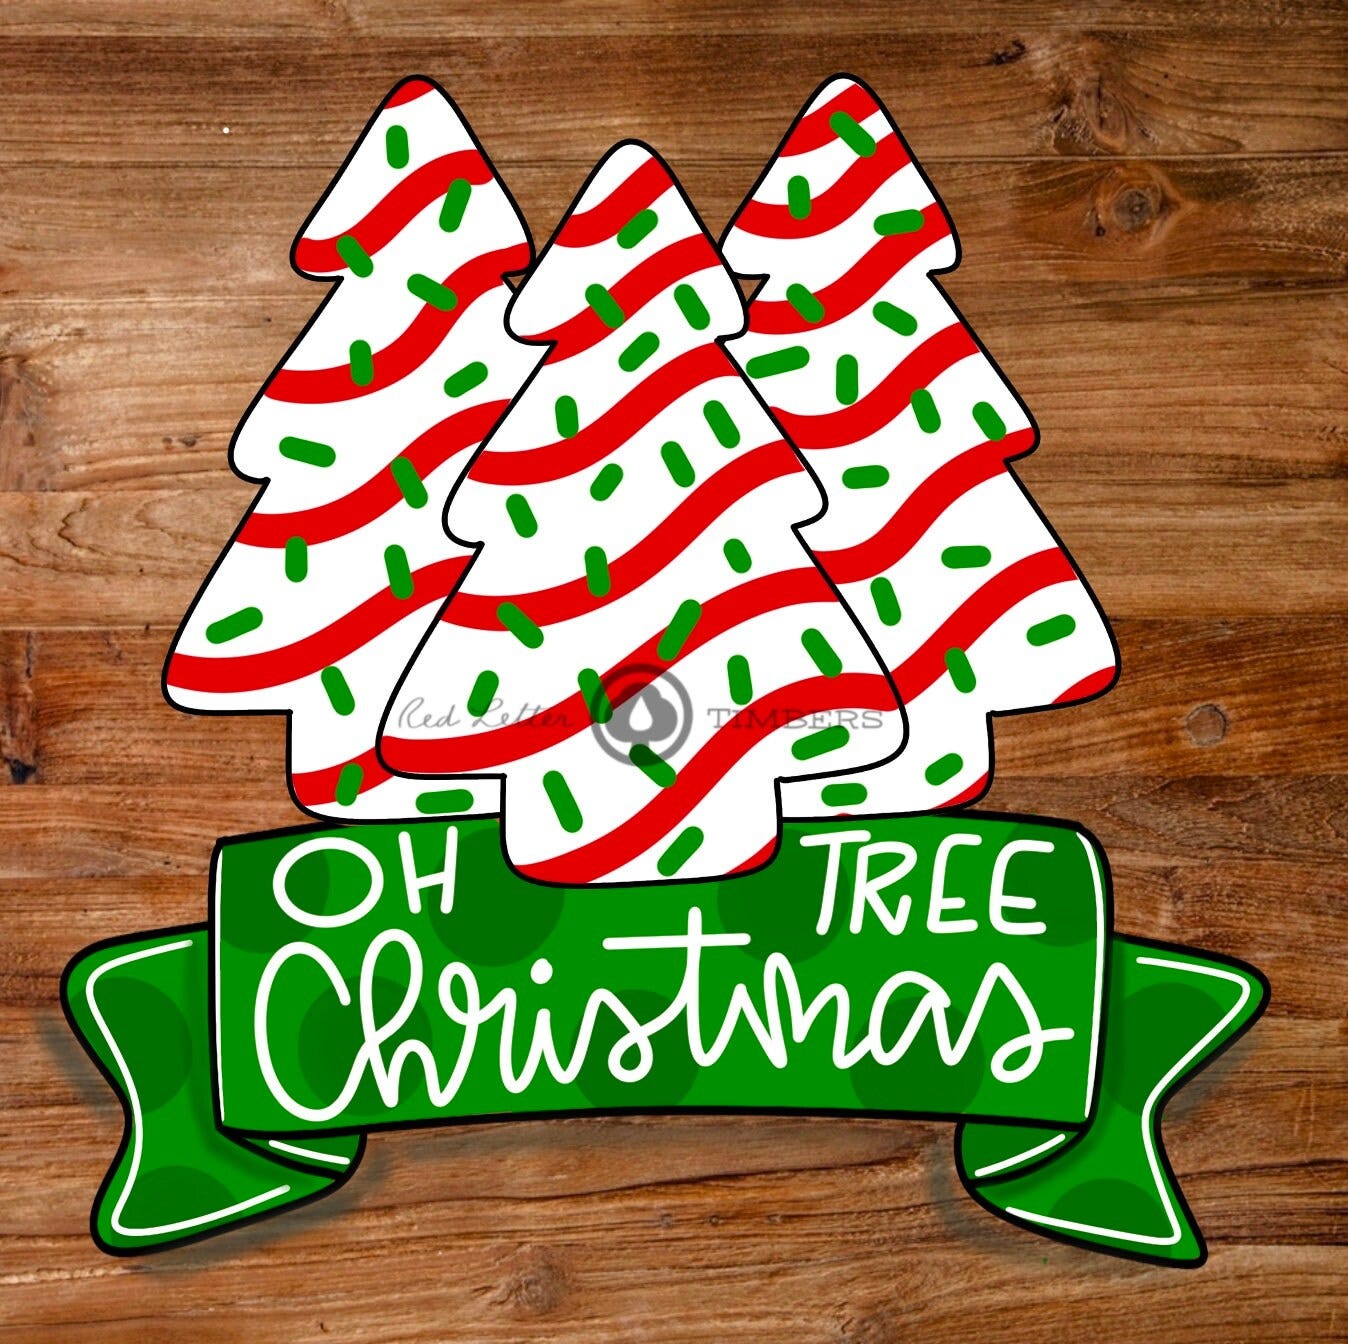 TEMPLATE- Oh Christmas Tree, Christmas Tree Cakes door hanger template